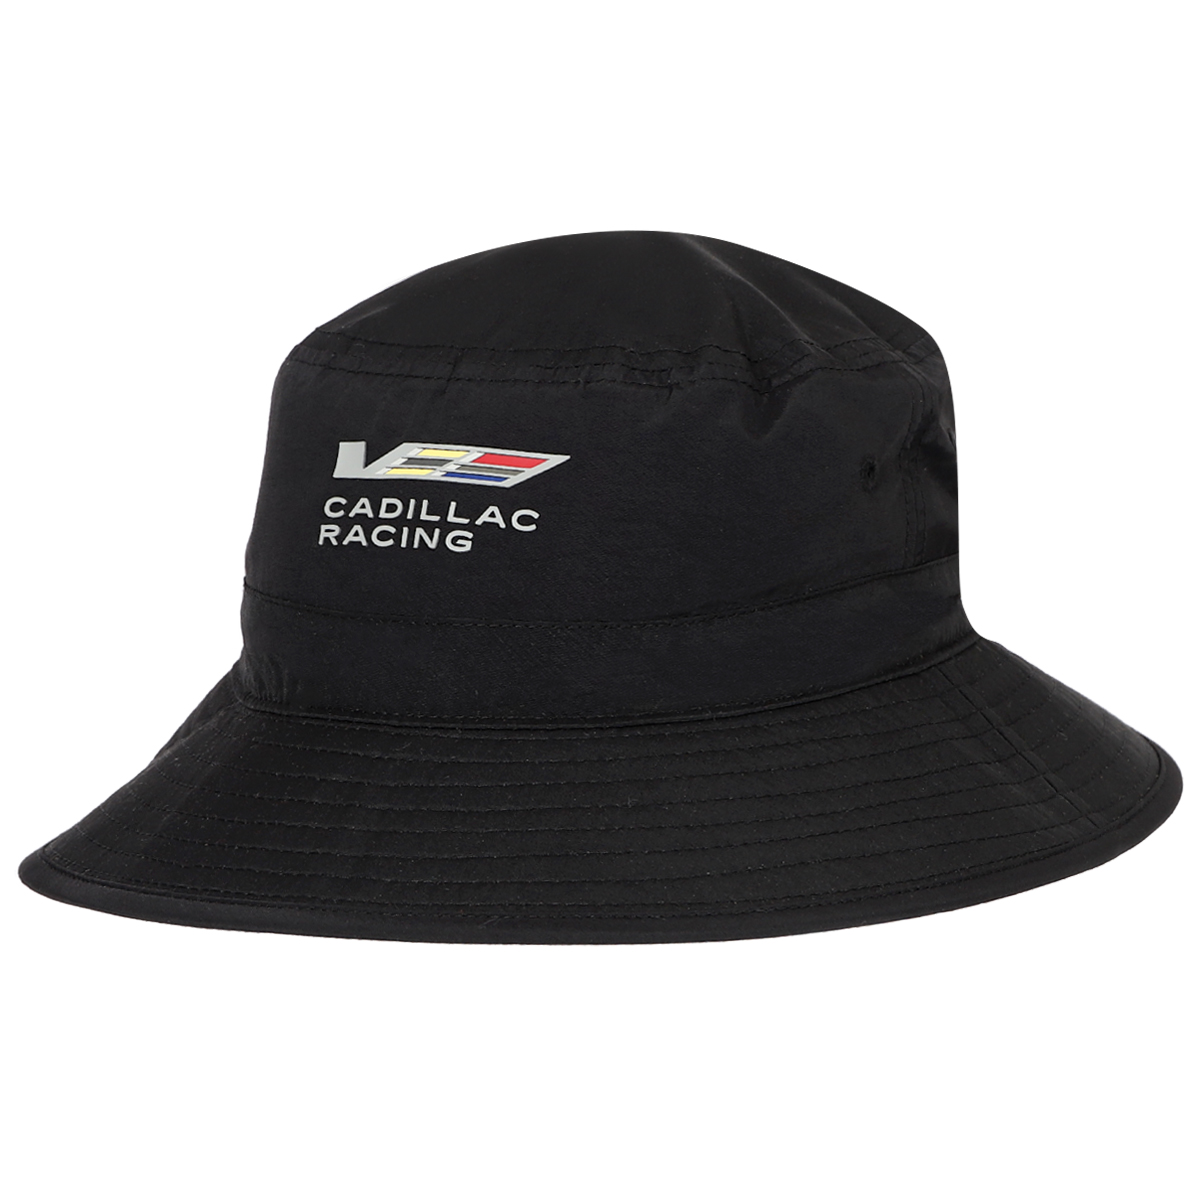 Cadillac Racing Black Bucket Hat